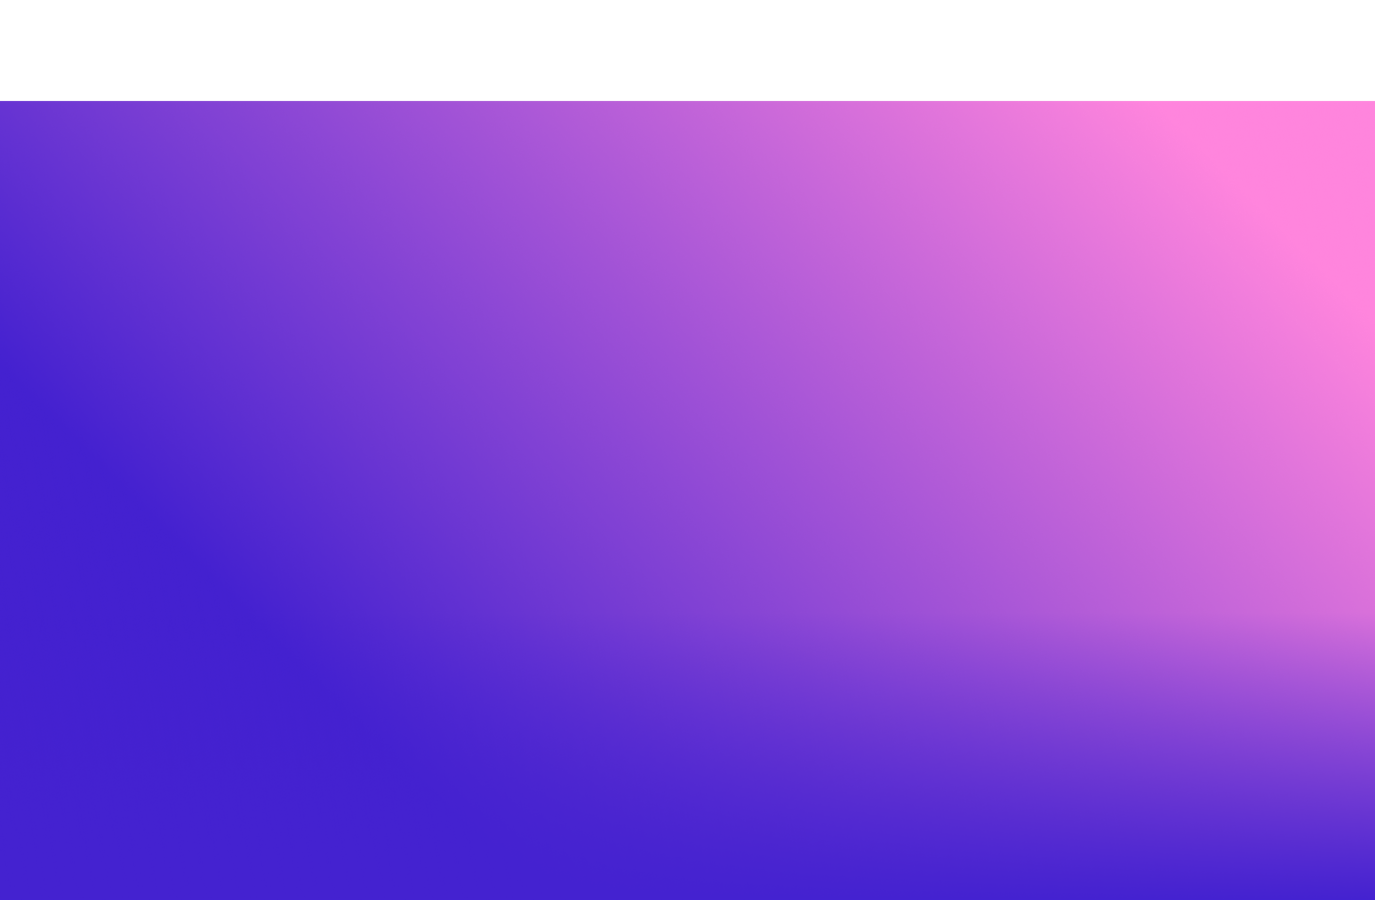 Pink to purple gradient